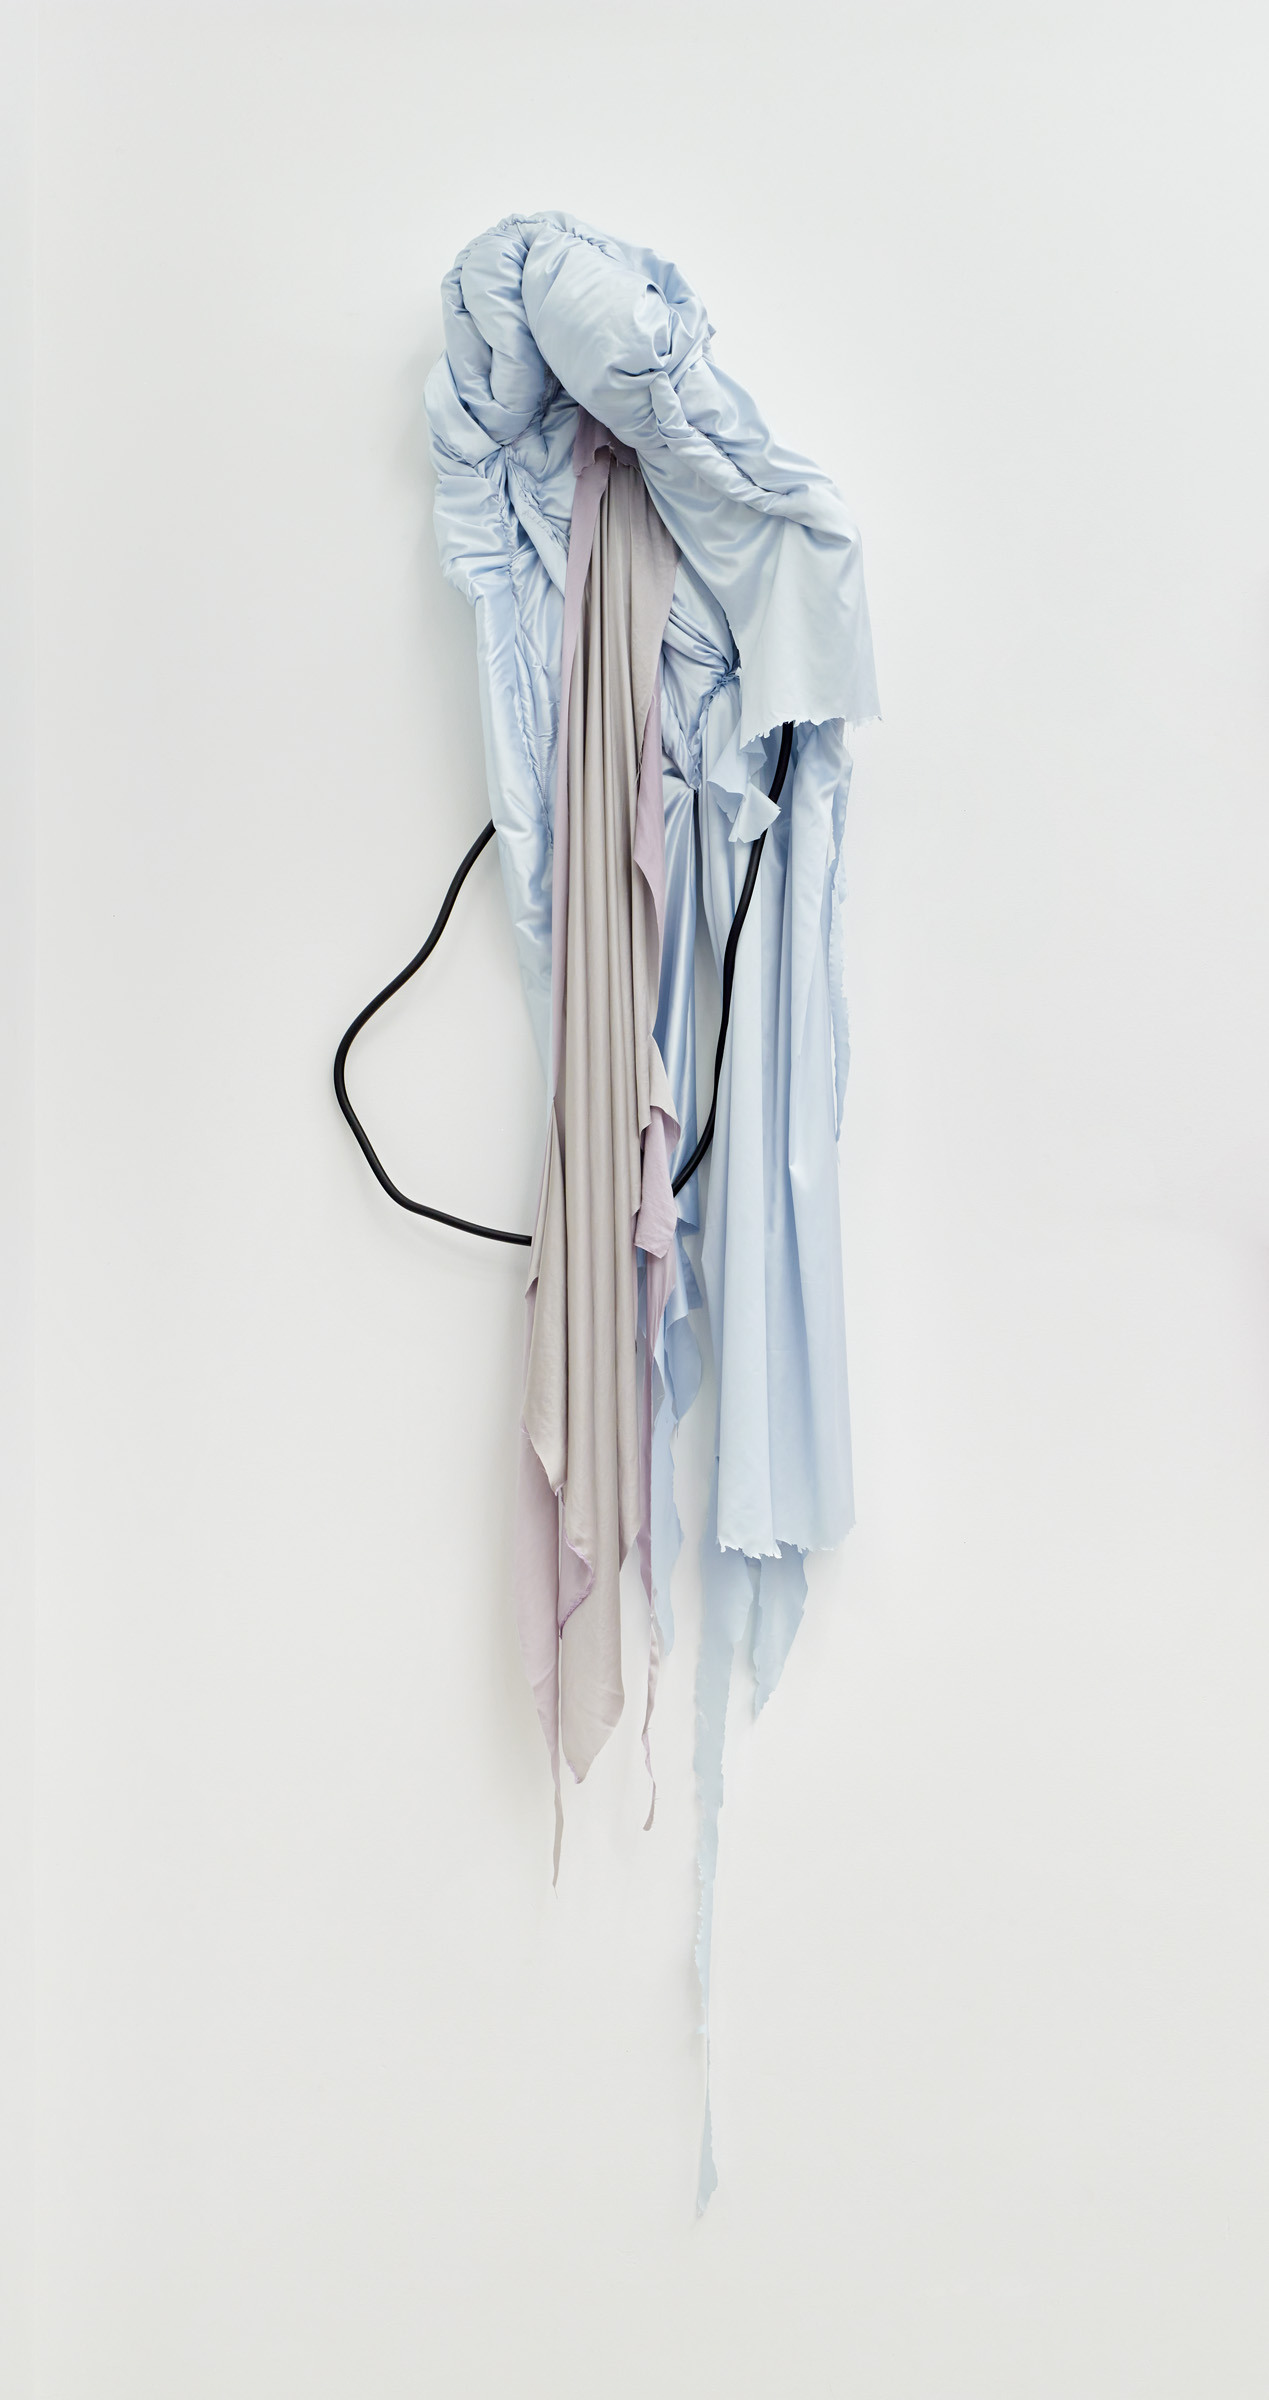 Zuza Golinska, Blue Madonna, painted steel, silk, satine, 2022